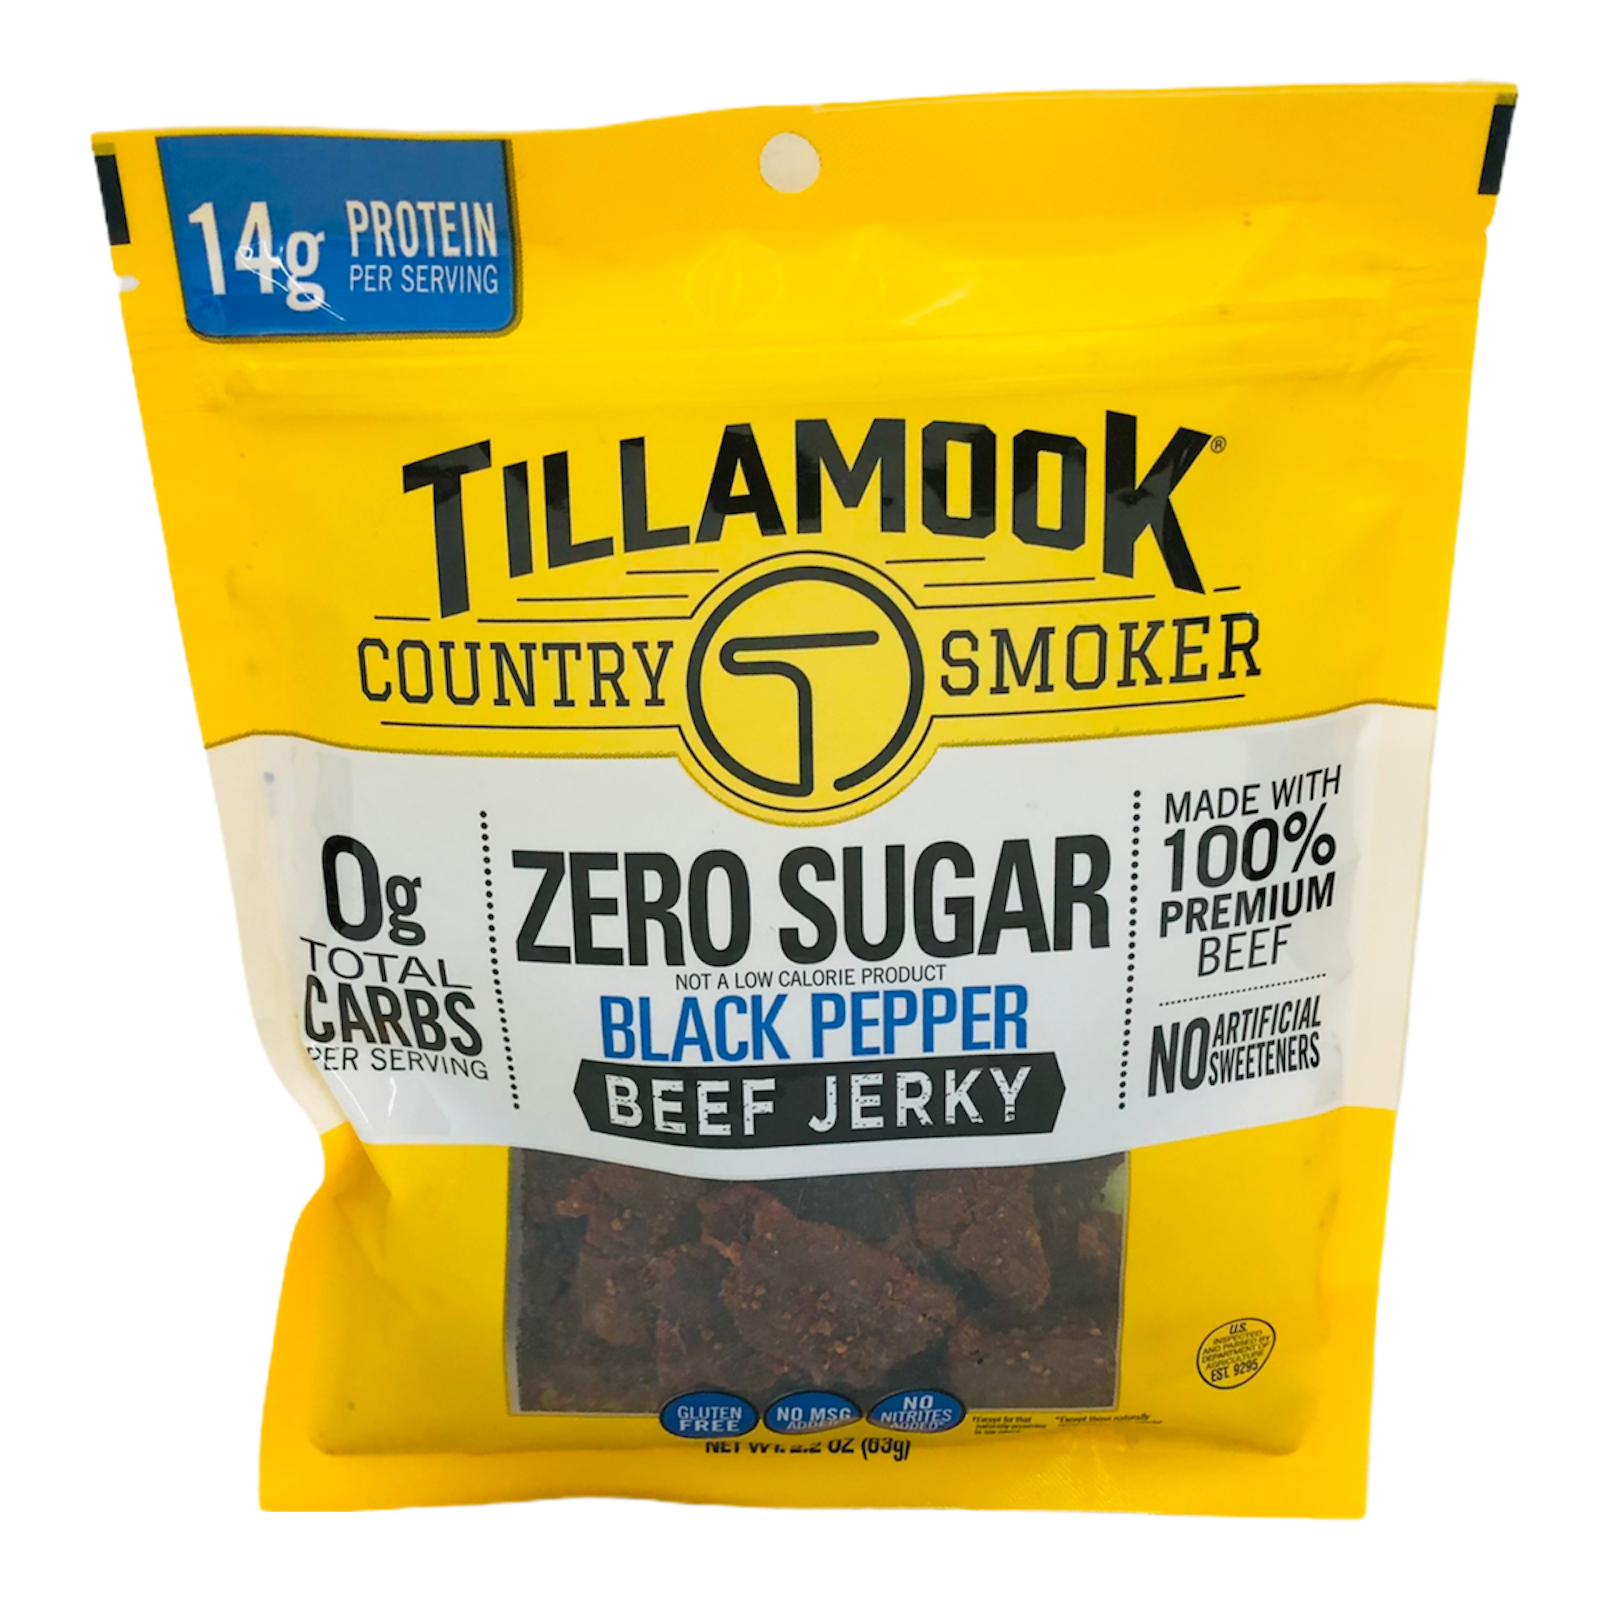 Tillamook Country Smoker Zero Sugar Black Pepper Beef Jerky 2.2 oz